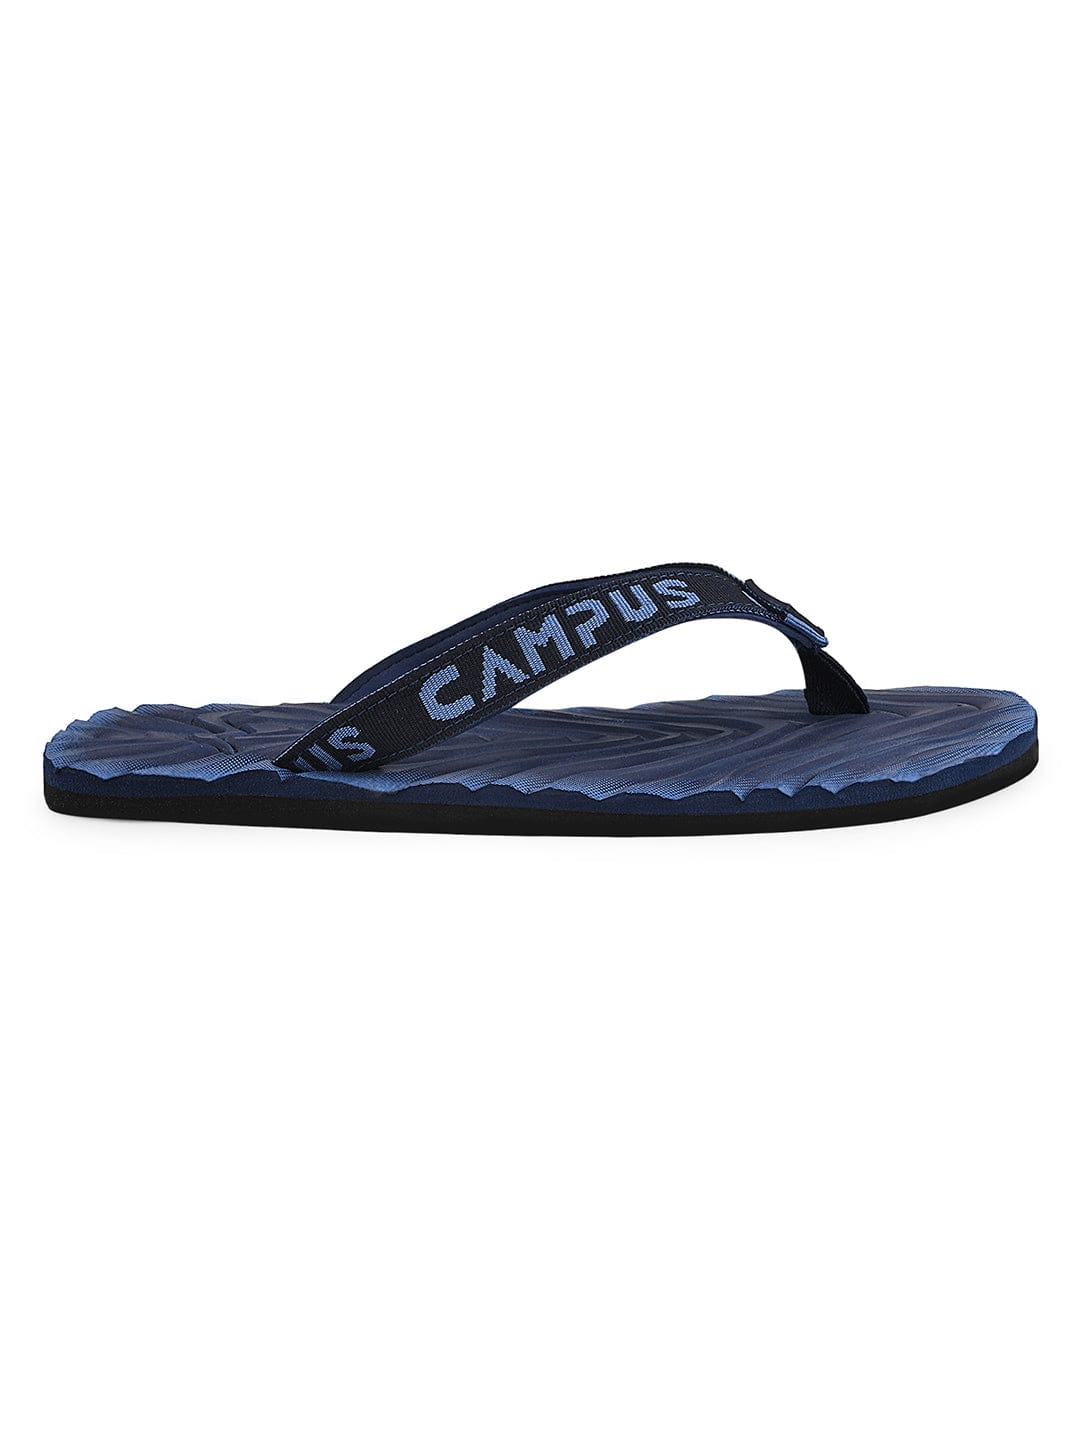 Buy Flip-Flop For Men: Gc-1048-Navy | Campus Shoes